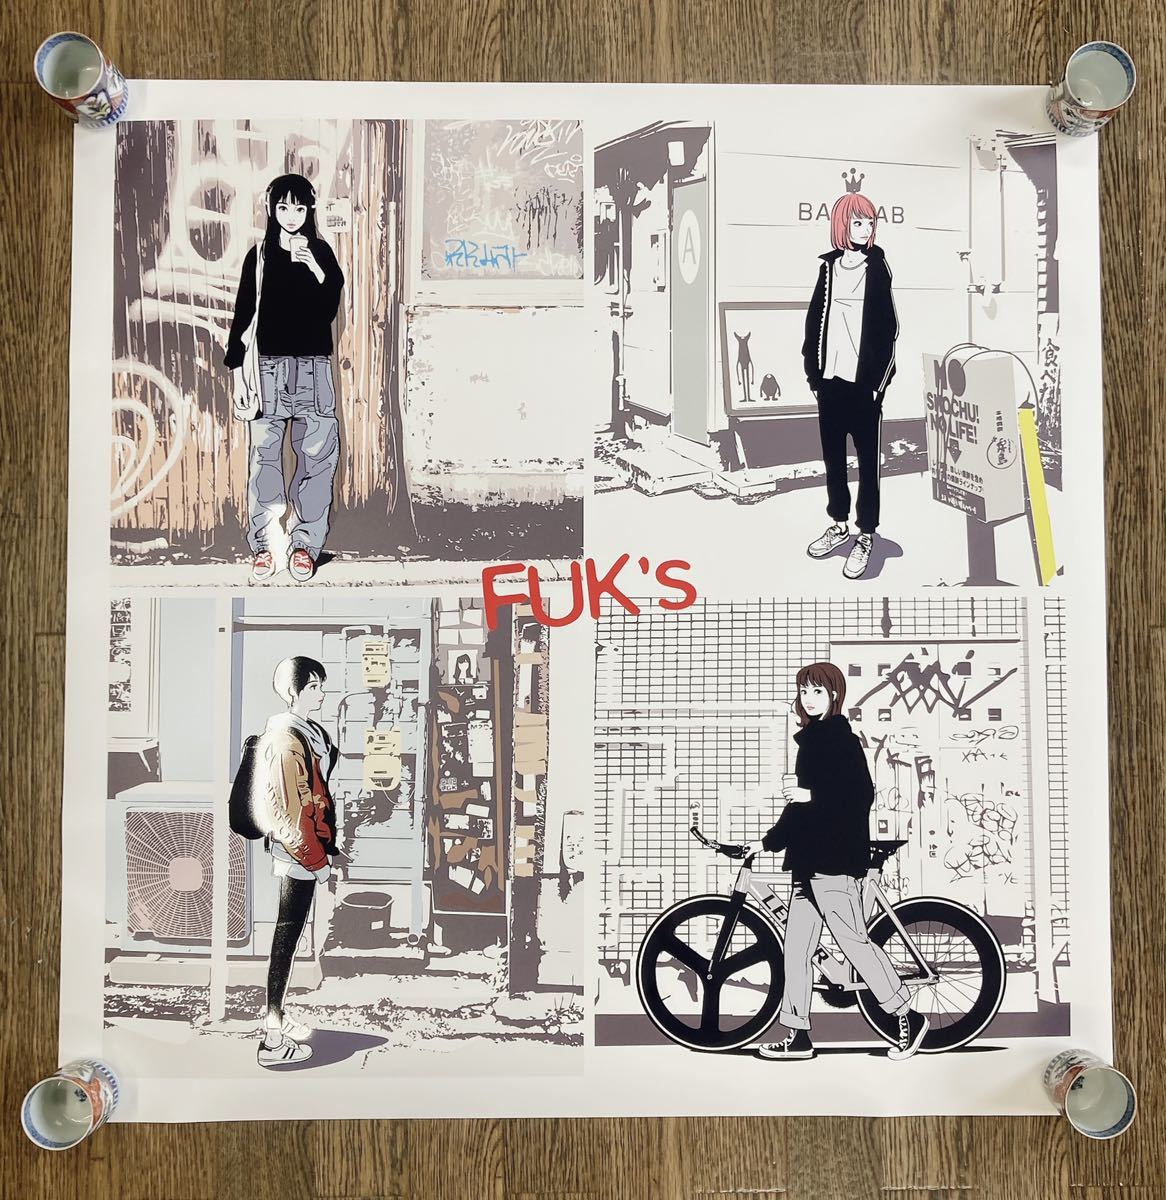 T-1 Backsideworks ポスター FUK’s Limited Poster バックサイドワークス 正方形 特殊印刷_画像1